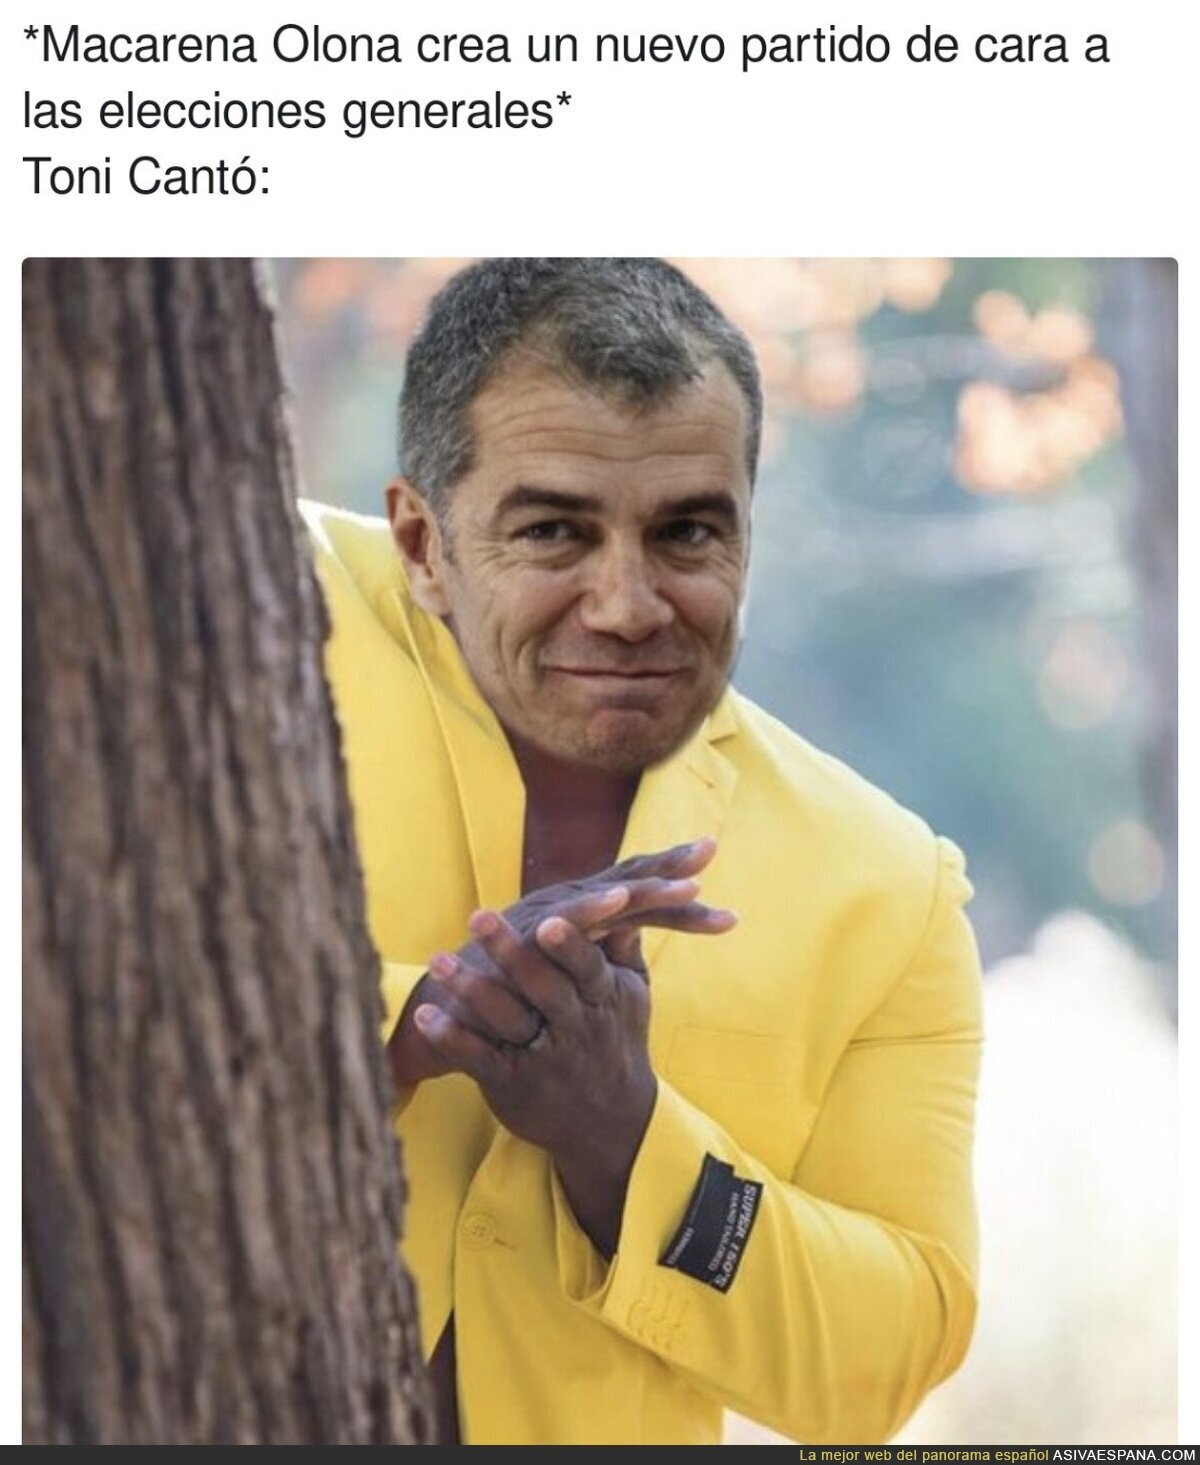 ¿Nuevo destino para Toni Cantó?